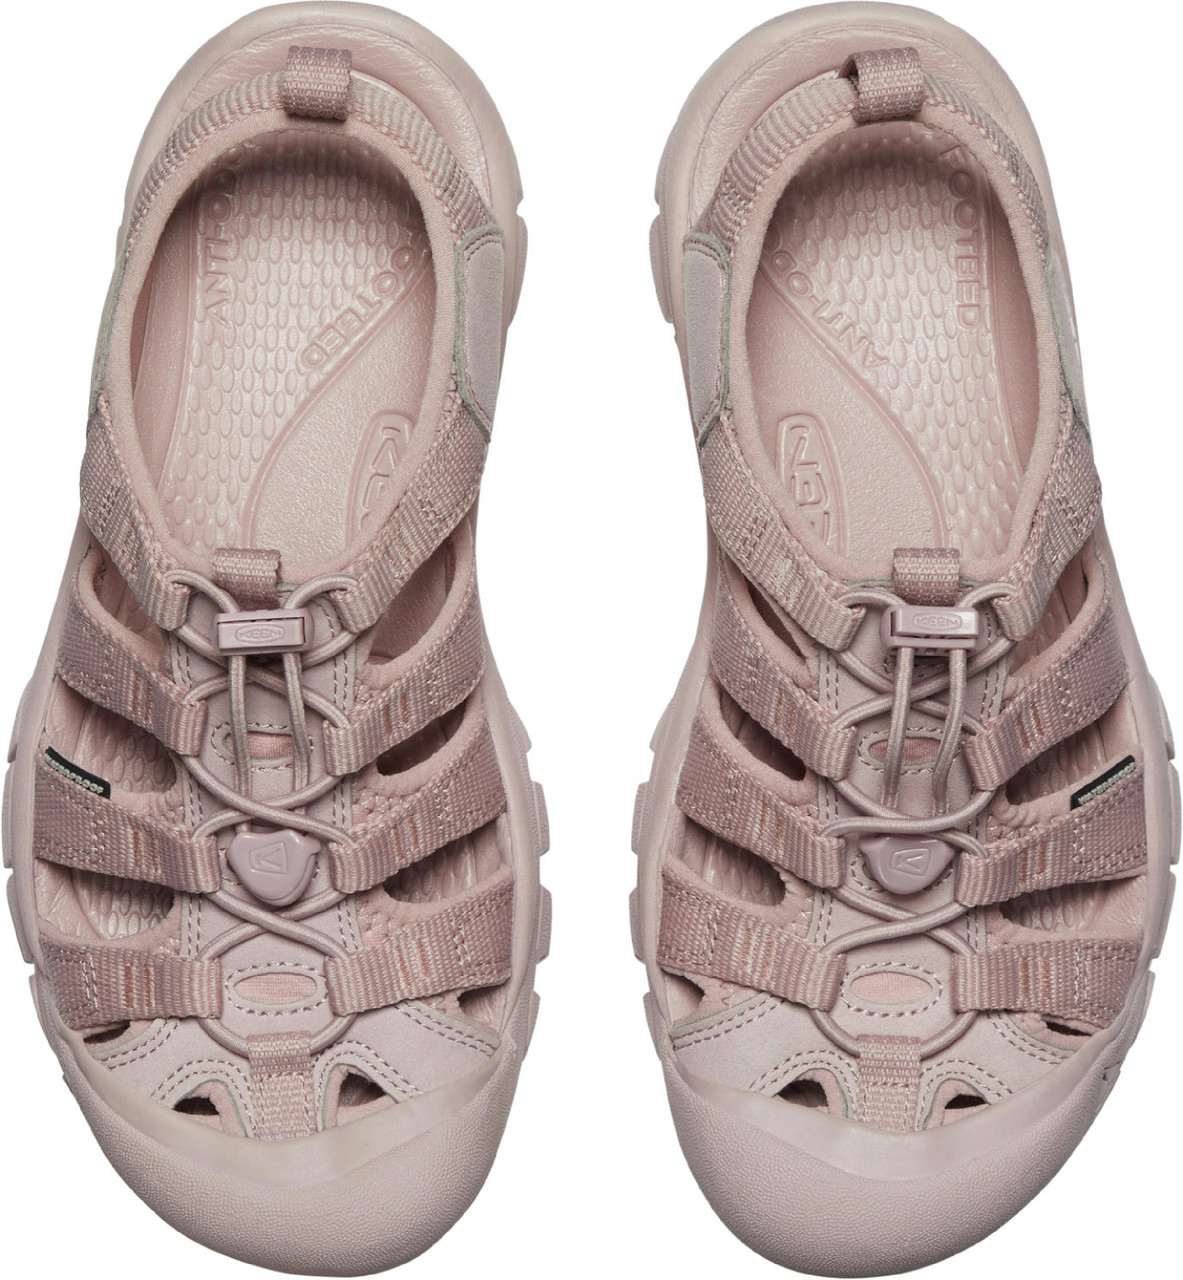 Newport H2 Sandals Monochrome/Fawn